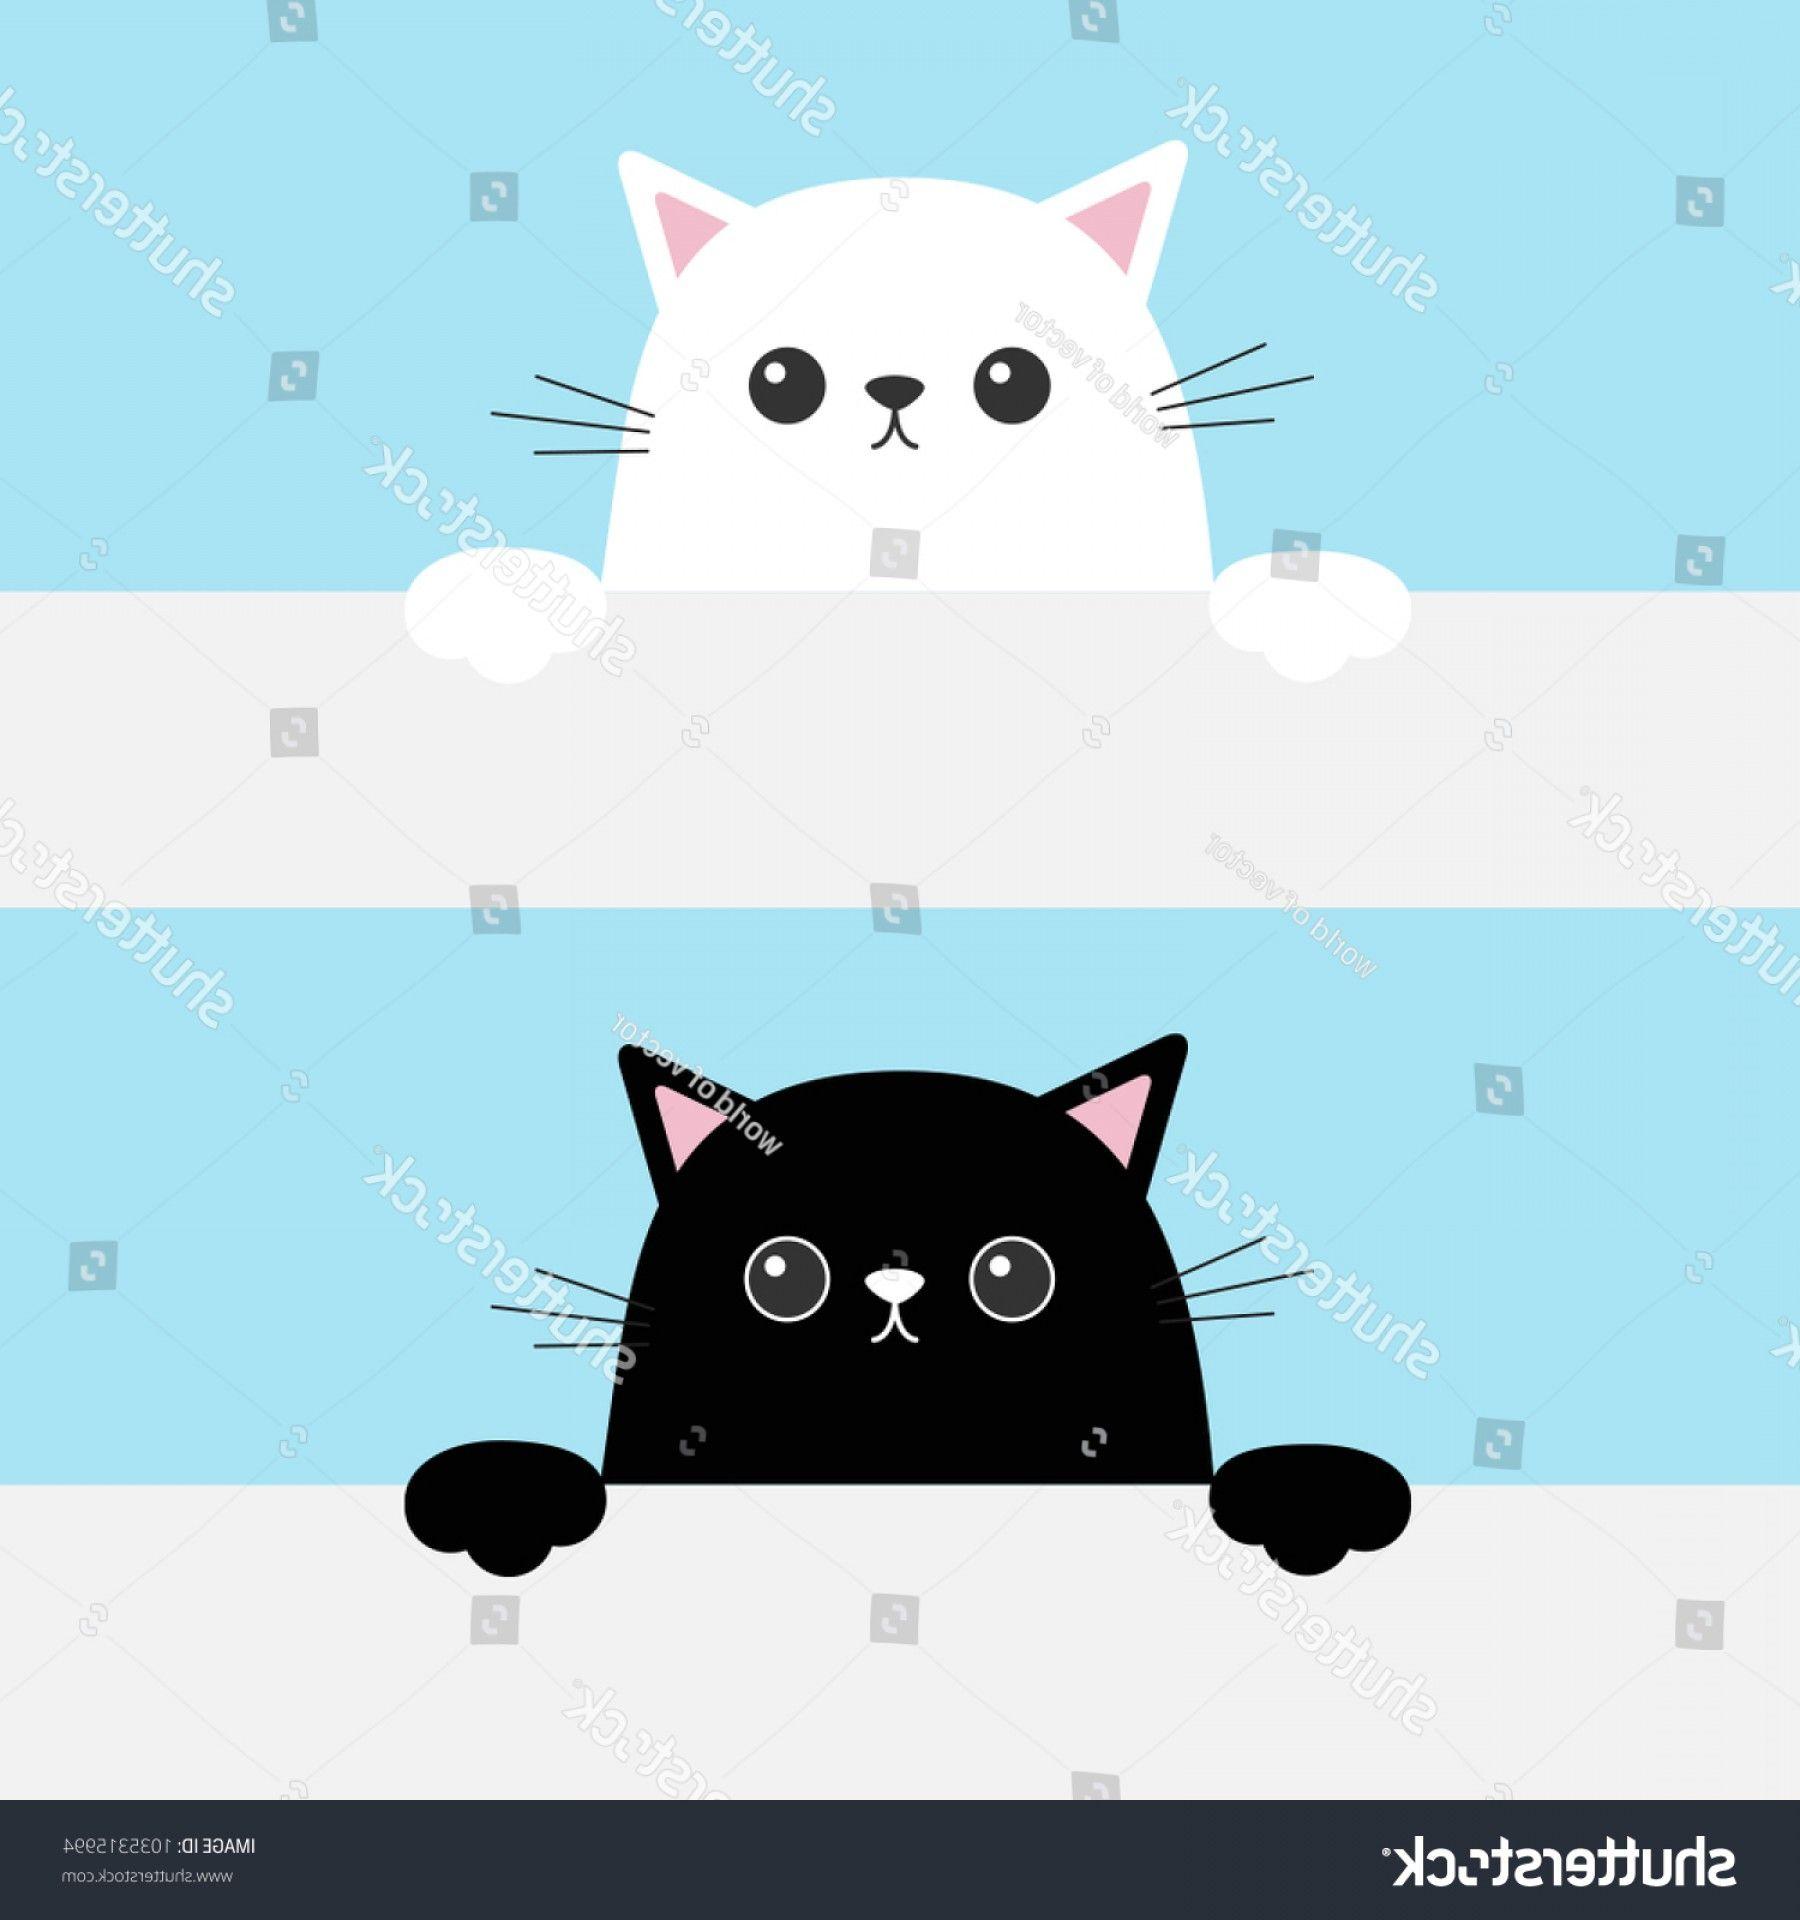 Black and White Cat Head Logo - Black White Funny Cat Head Face